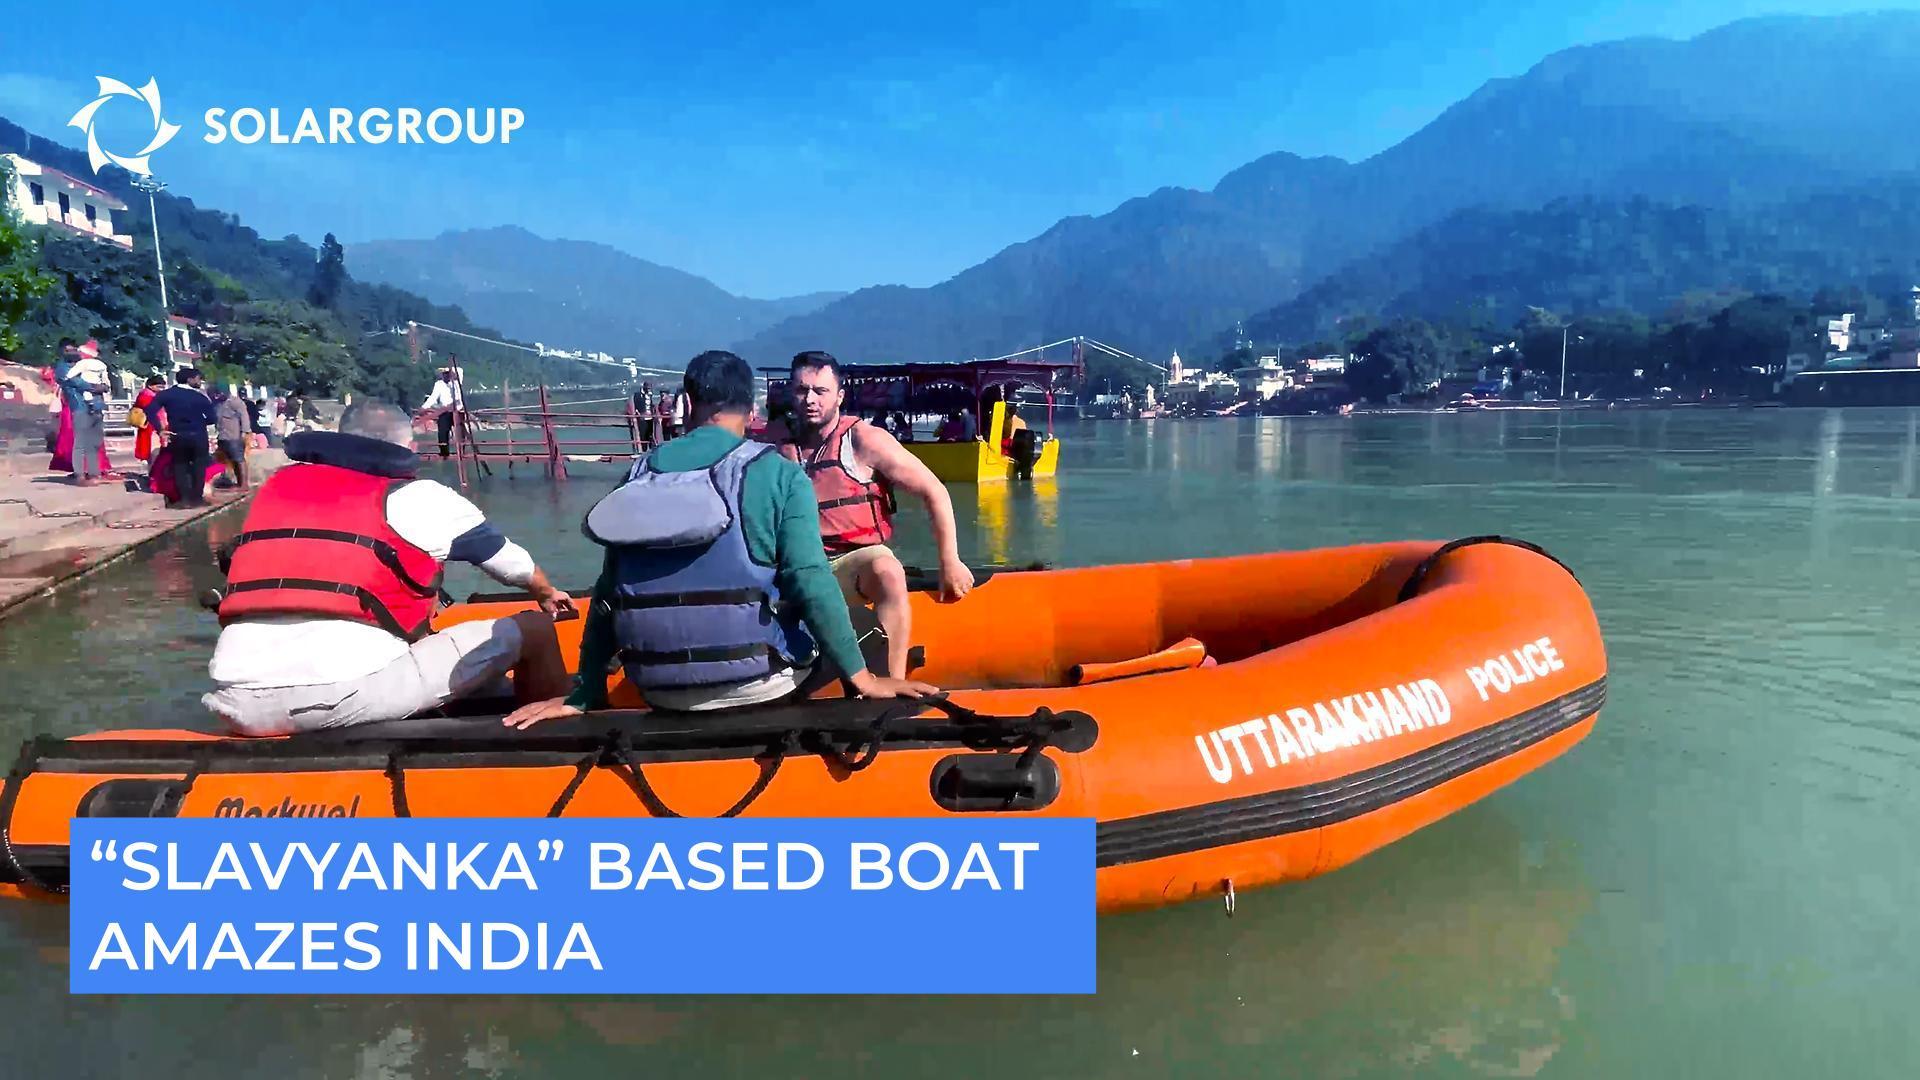 Why did the "Slavyanka" based boat motor amaze Indian business people?